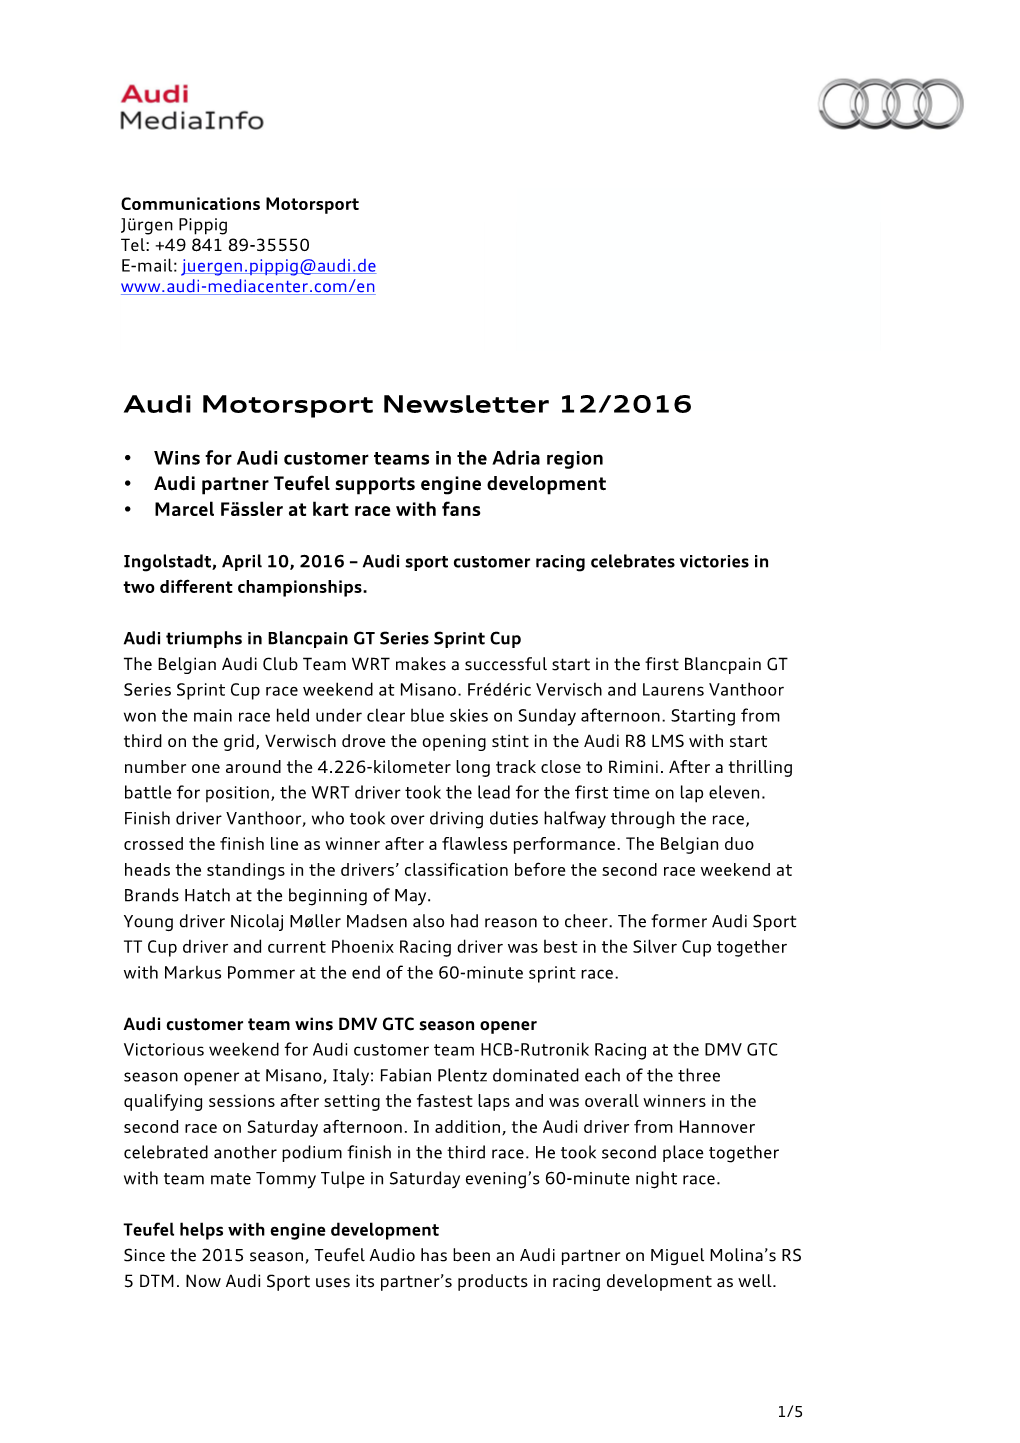 Audi Motorsport Newsletter 12/2016